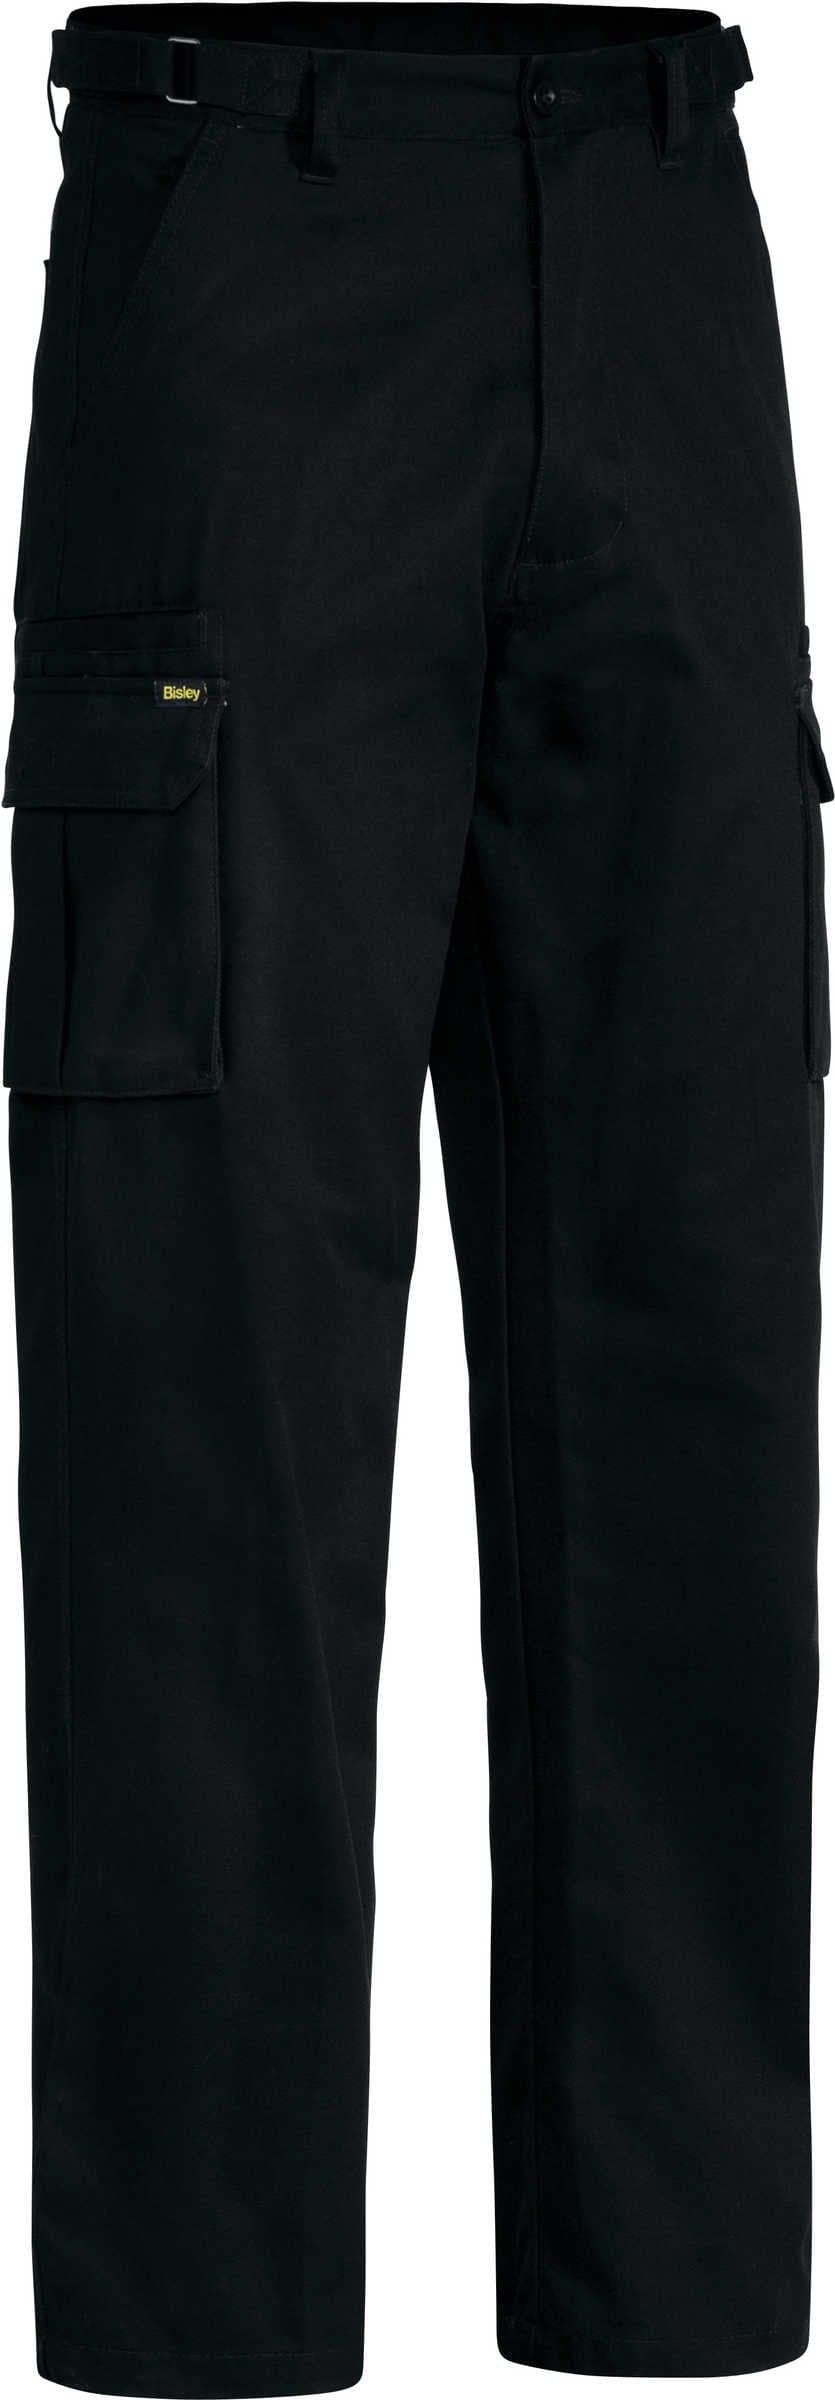 Bisley 8 Pocket Cargo Pant - Black (BPC6007)